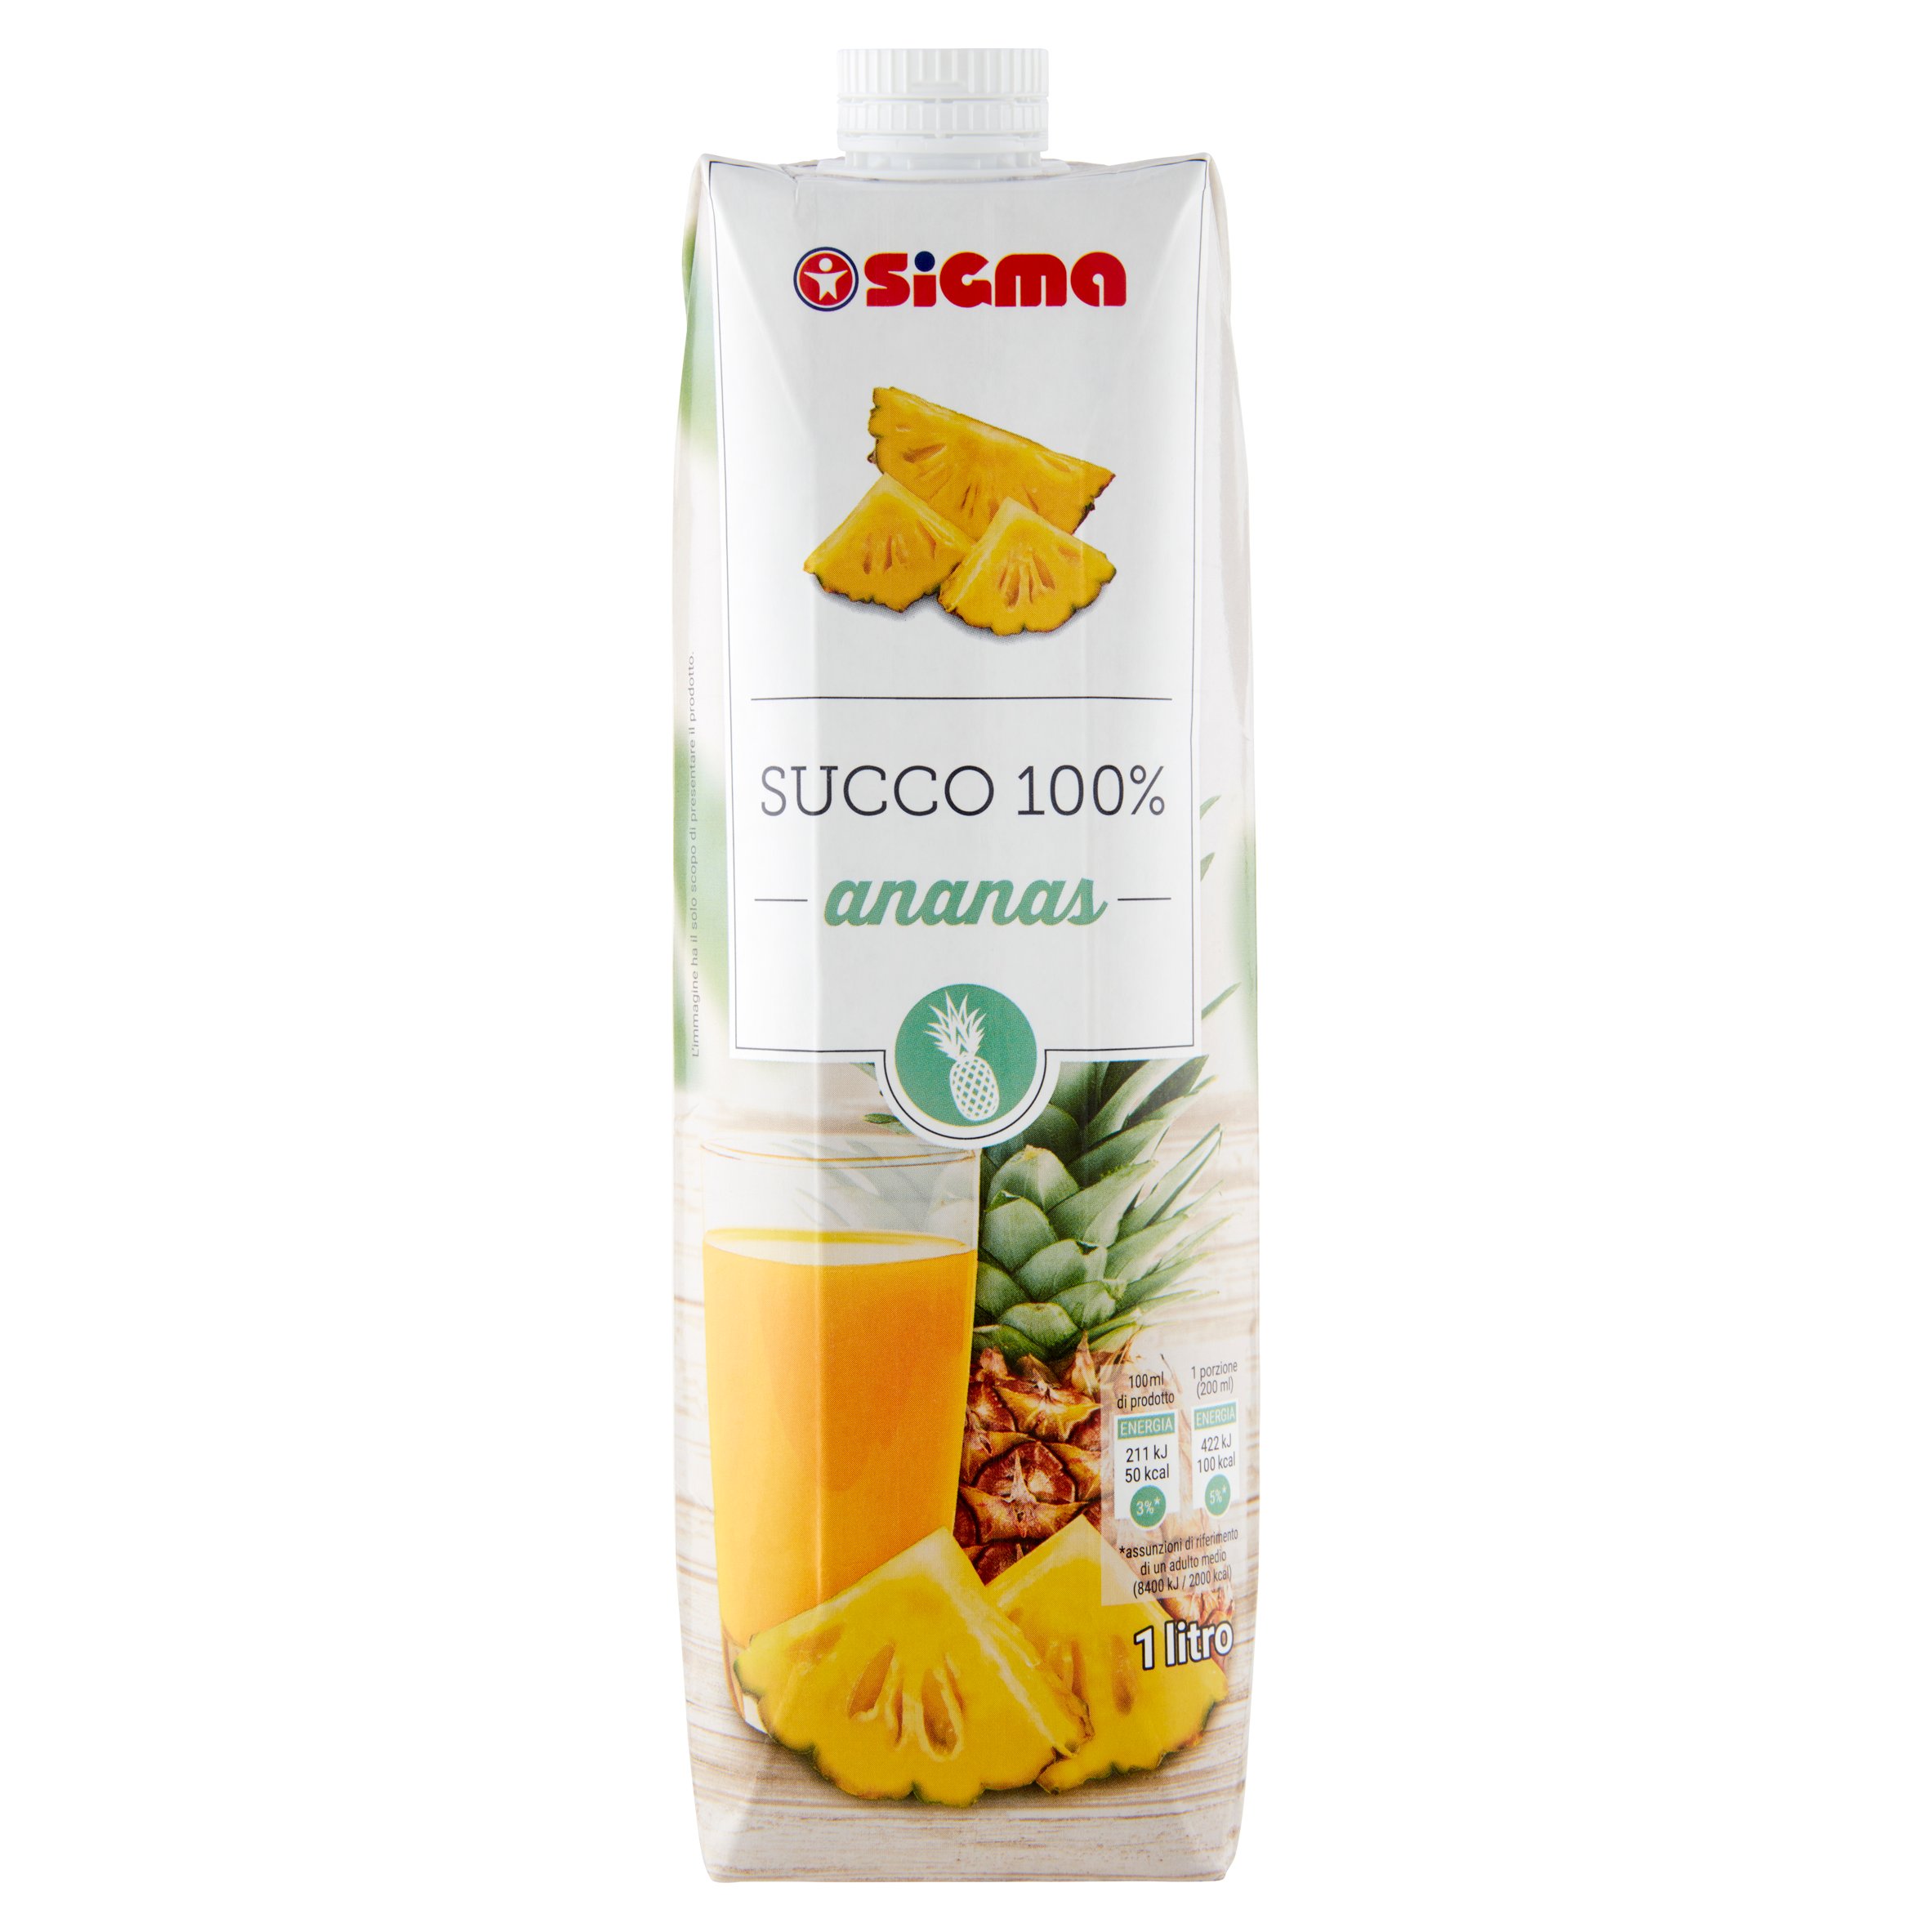 Succo Ananas 100% - Rauch - Confezione cl. 20 x 24 Bottiglie – Bottle of  Italy